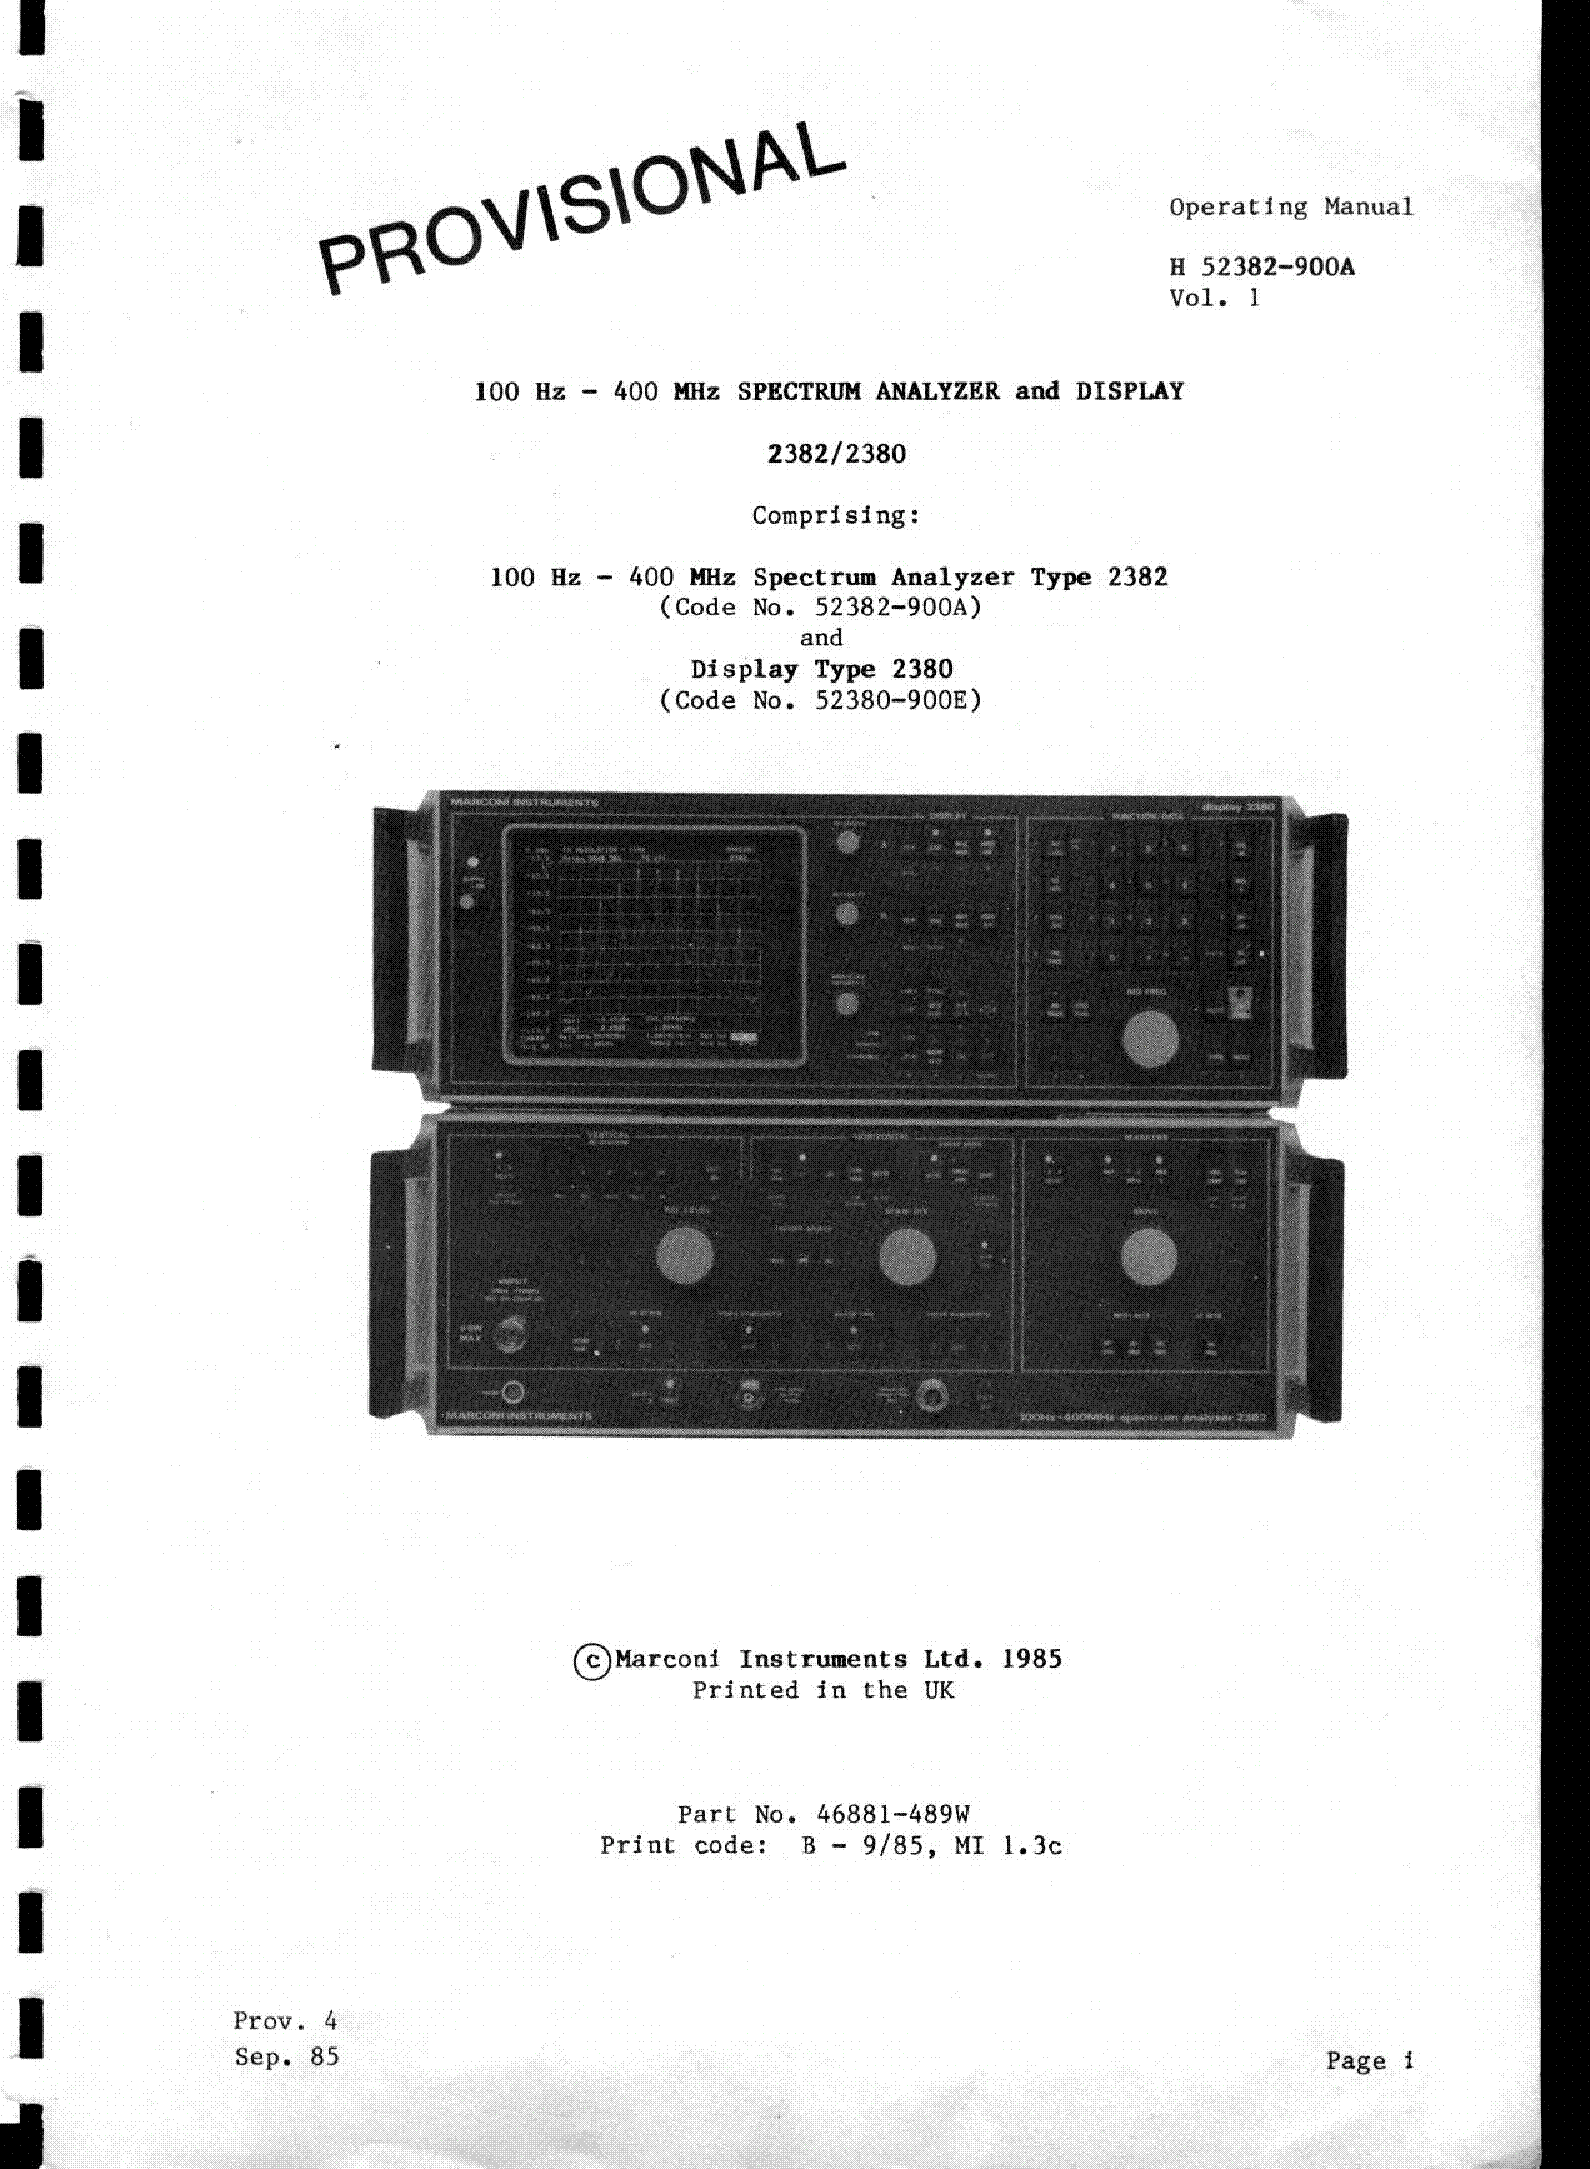 MARCONI 2380 2382 100HZ-400MHZ SPECTRUM ANALYZER DIPLAY 1985 OP SM service manual (2nd page)